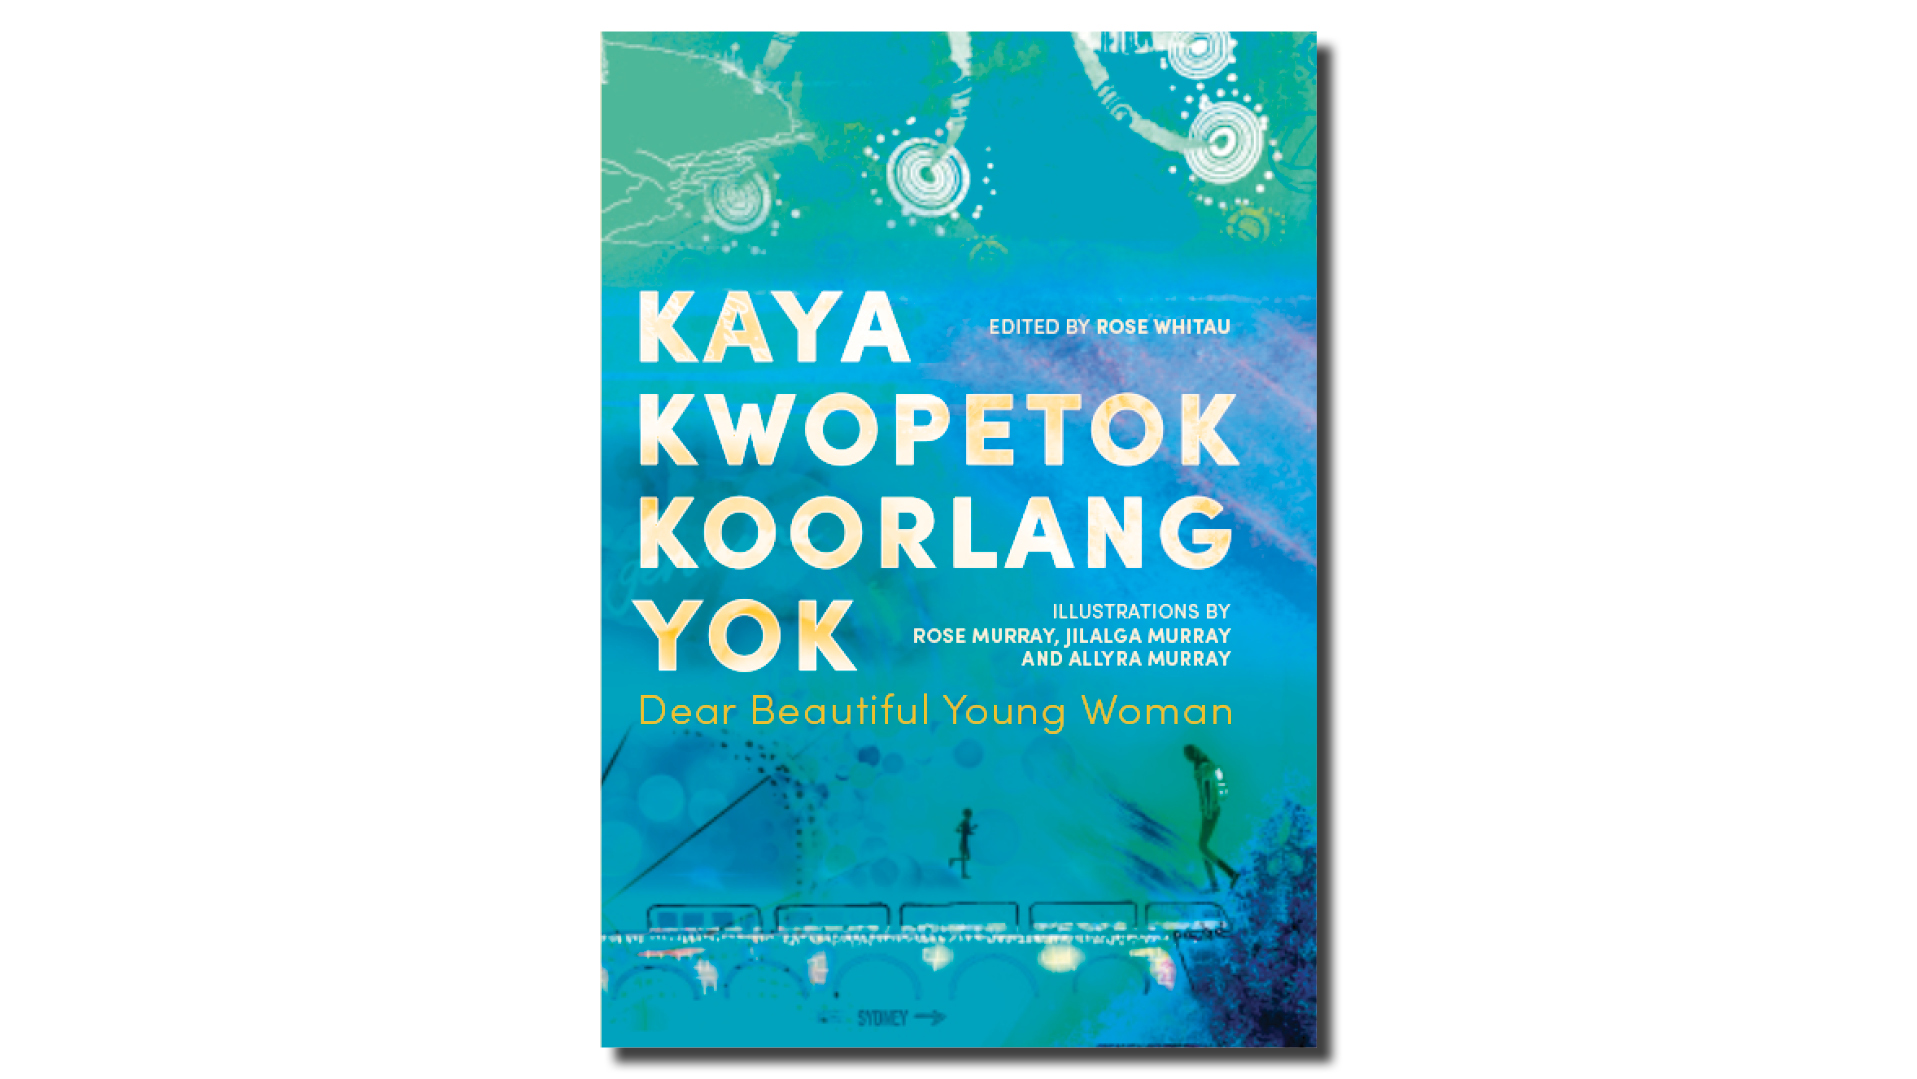 Kaya Kwopetok Koorlang Yok Book Cover